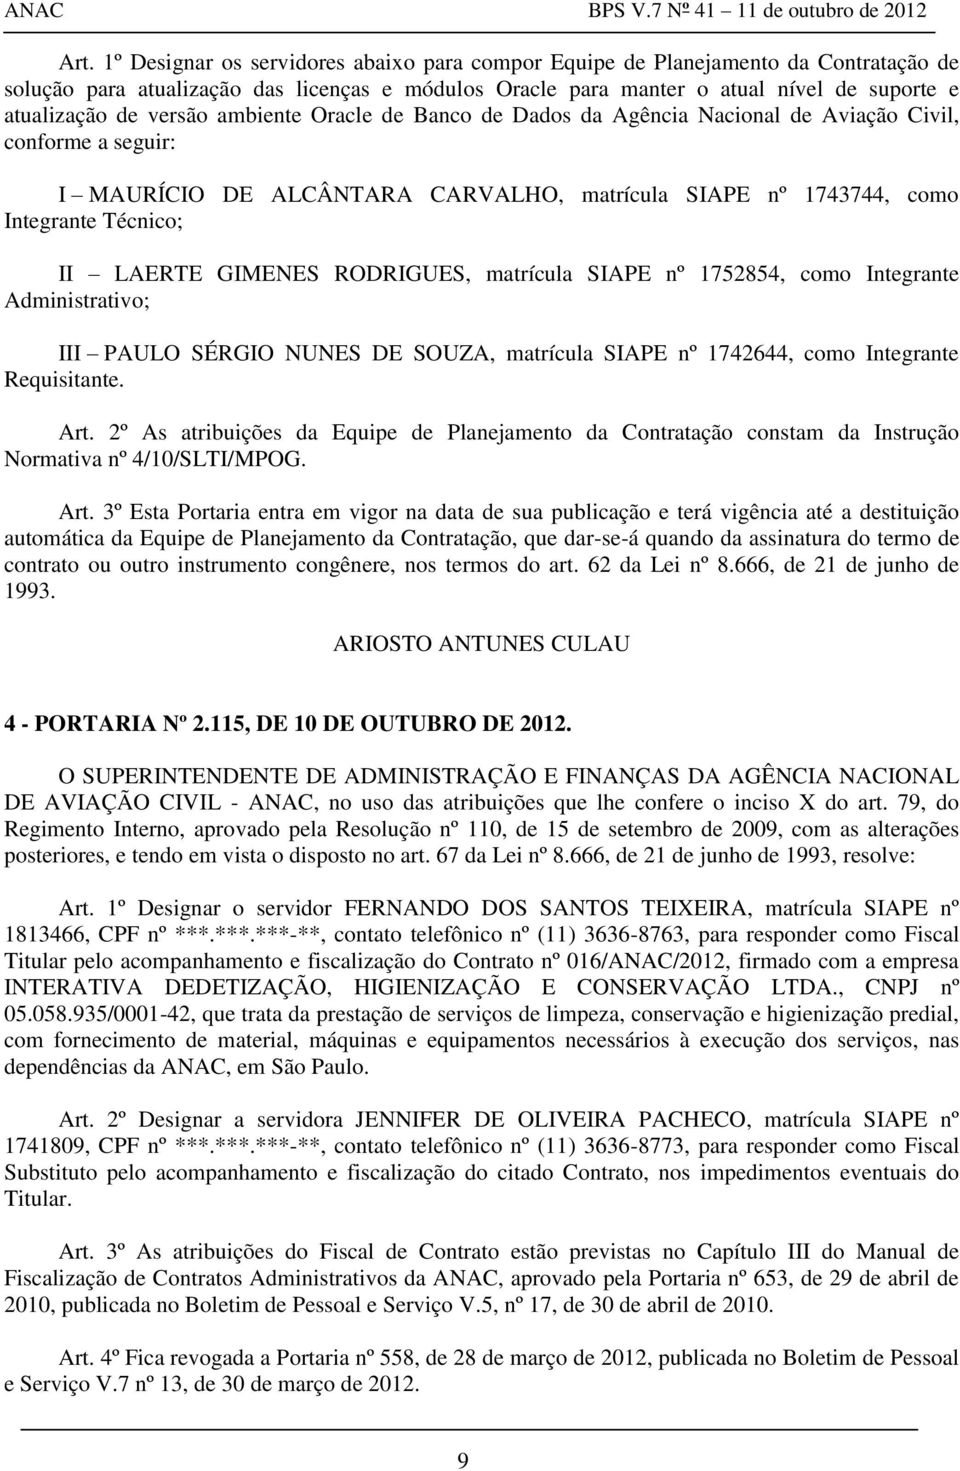 GIMENES RODRIGUES, matrícula SIAPE nº 1752854, como Integrante Administrativo; III PAULO SÉRGIO NUNES DE SOUZA, matrícula SIAPE nº 1742644, como Integrante Requisitante. Art.